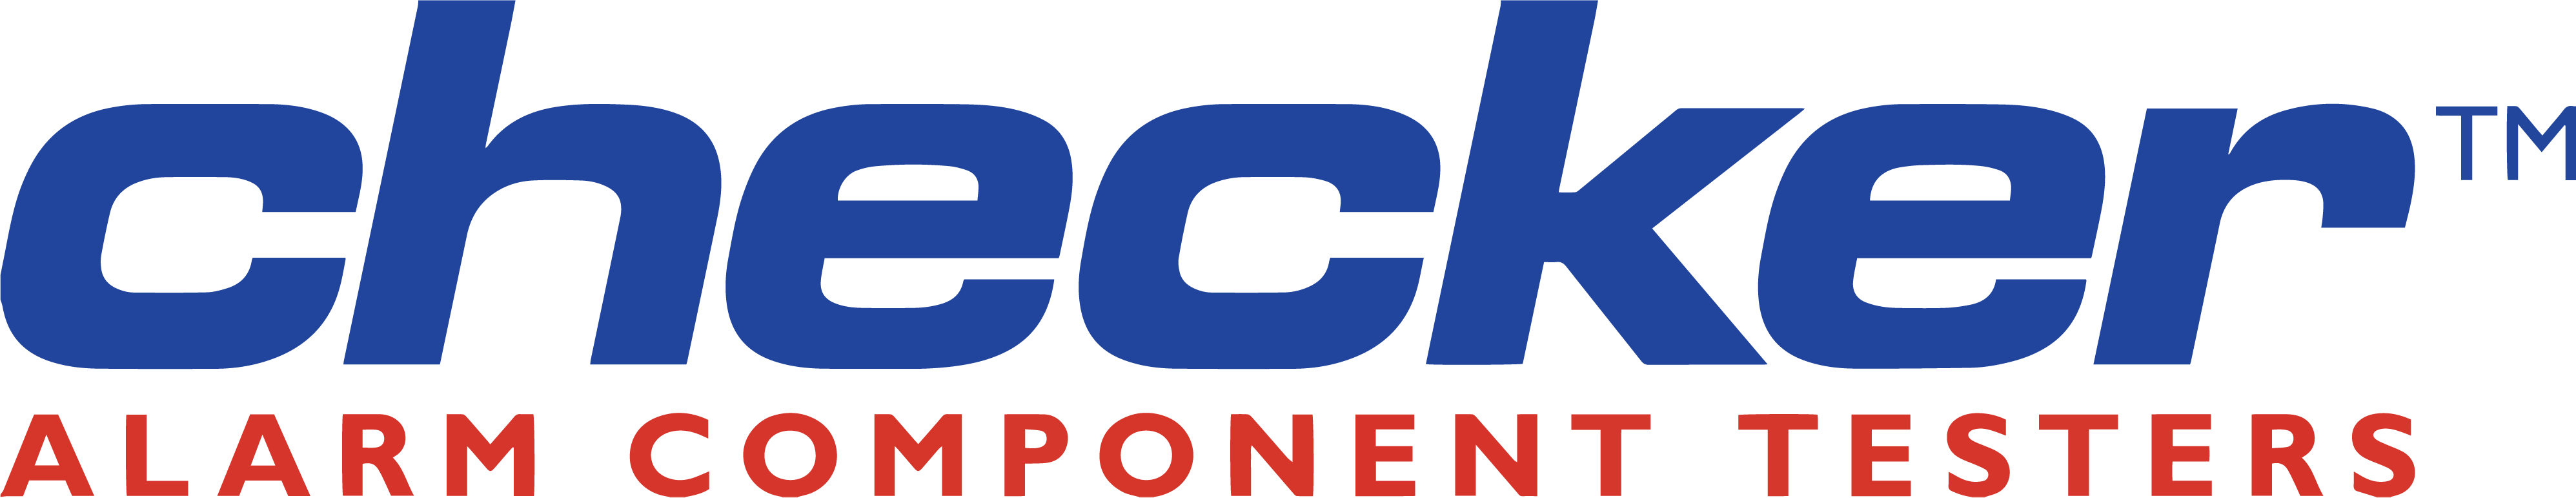 checker alarm component testers logo